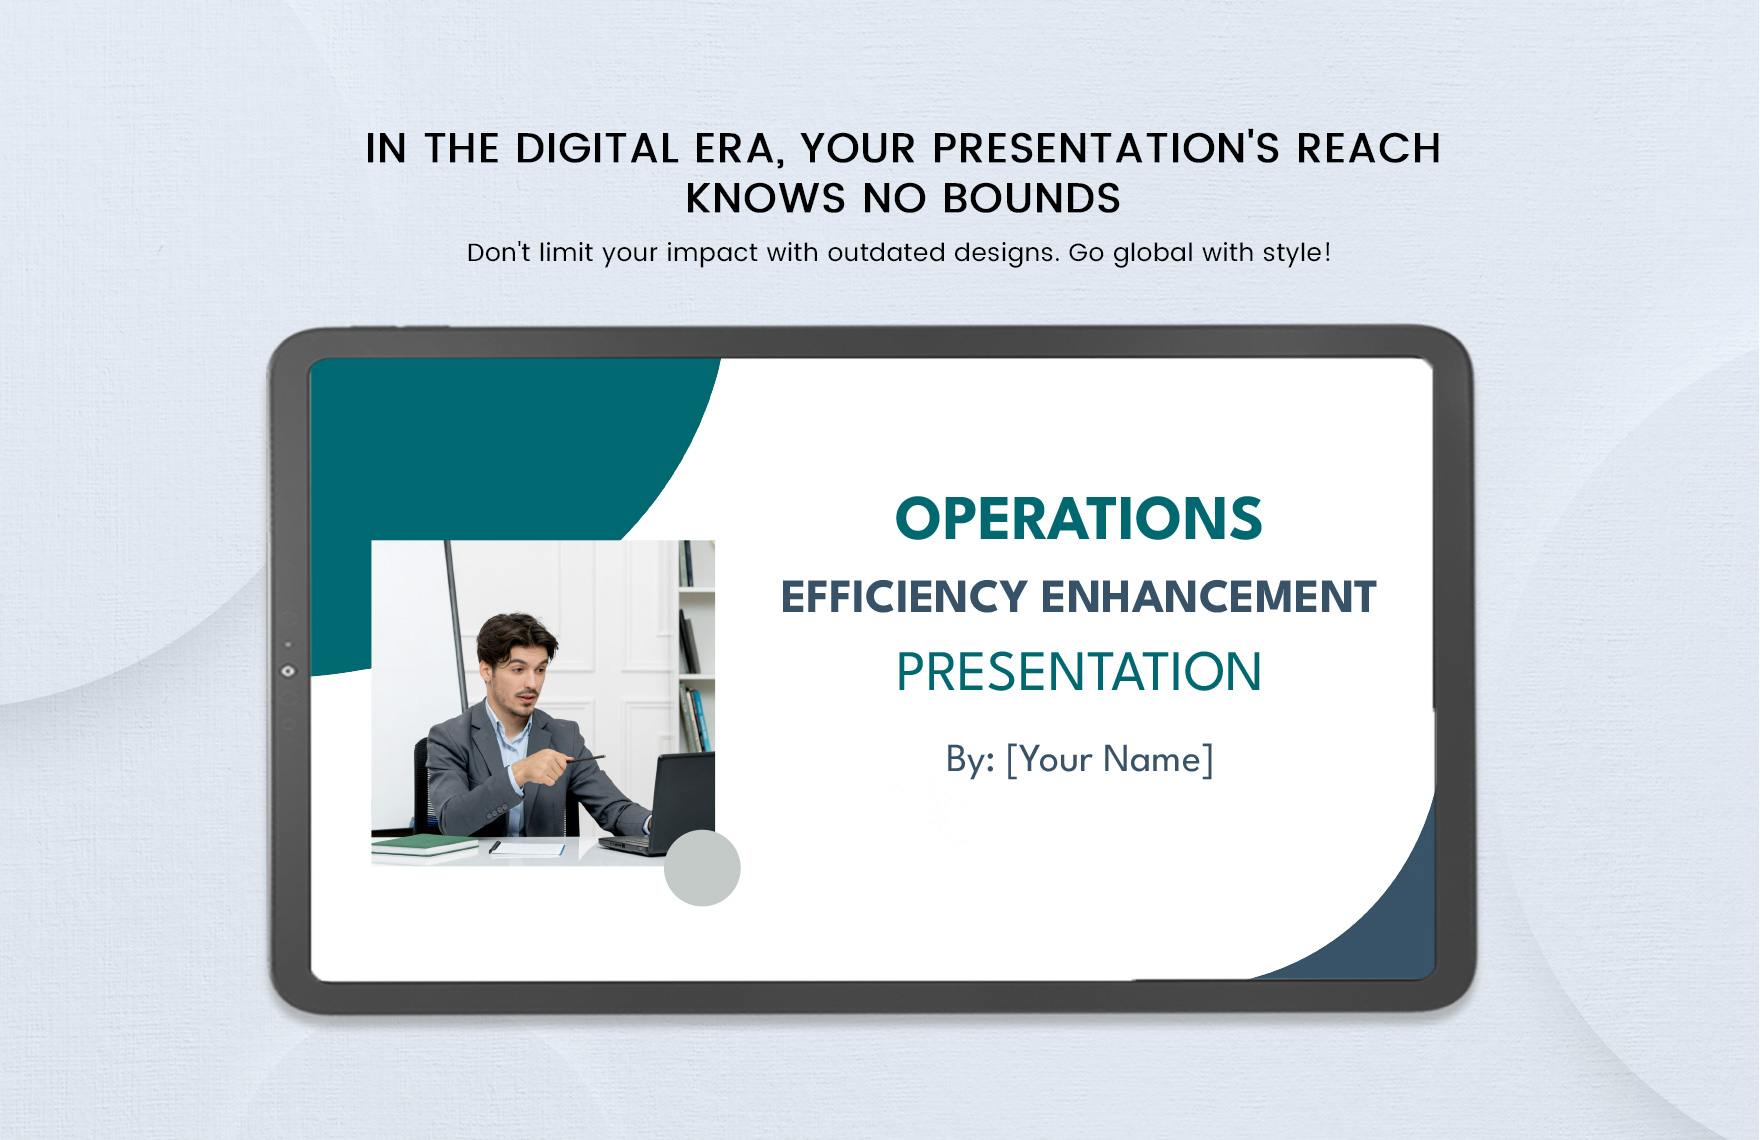 Operations Efficiency Enhancement Presentation Template